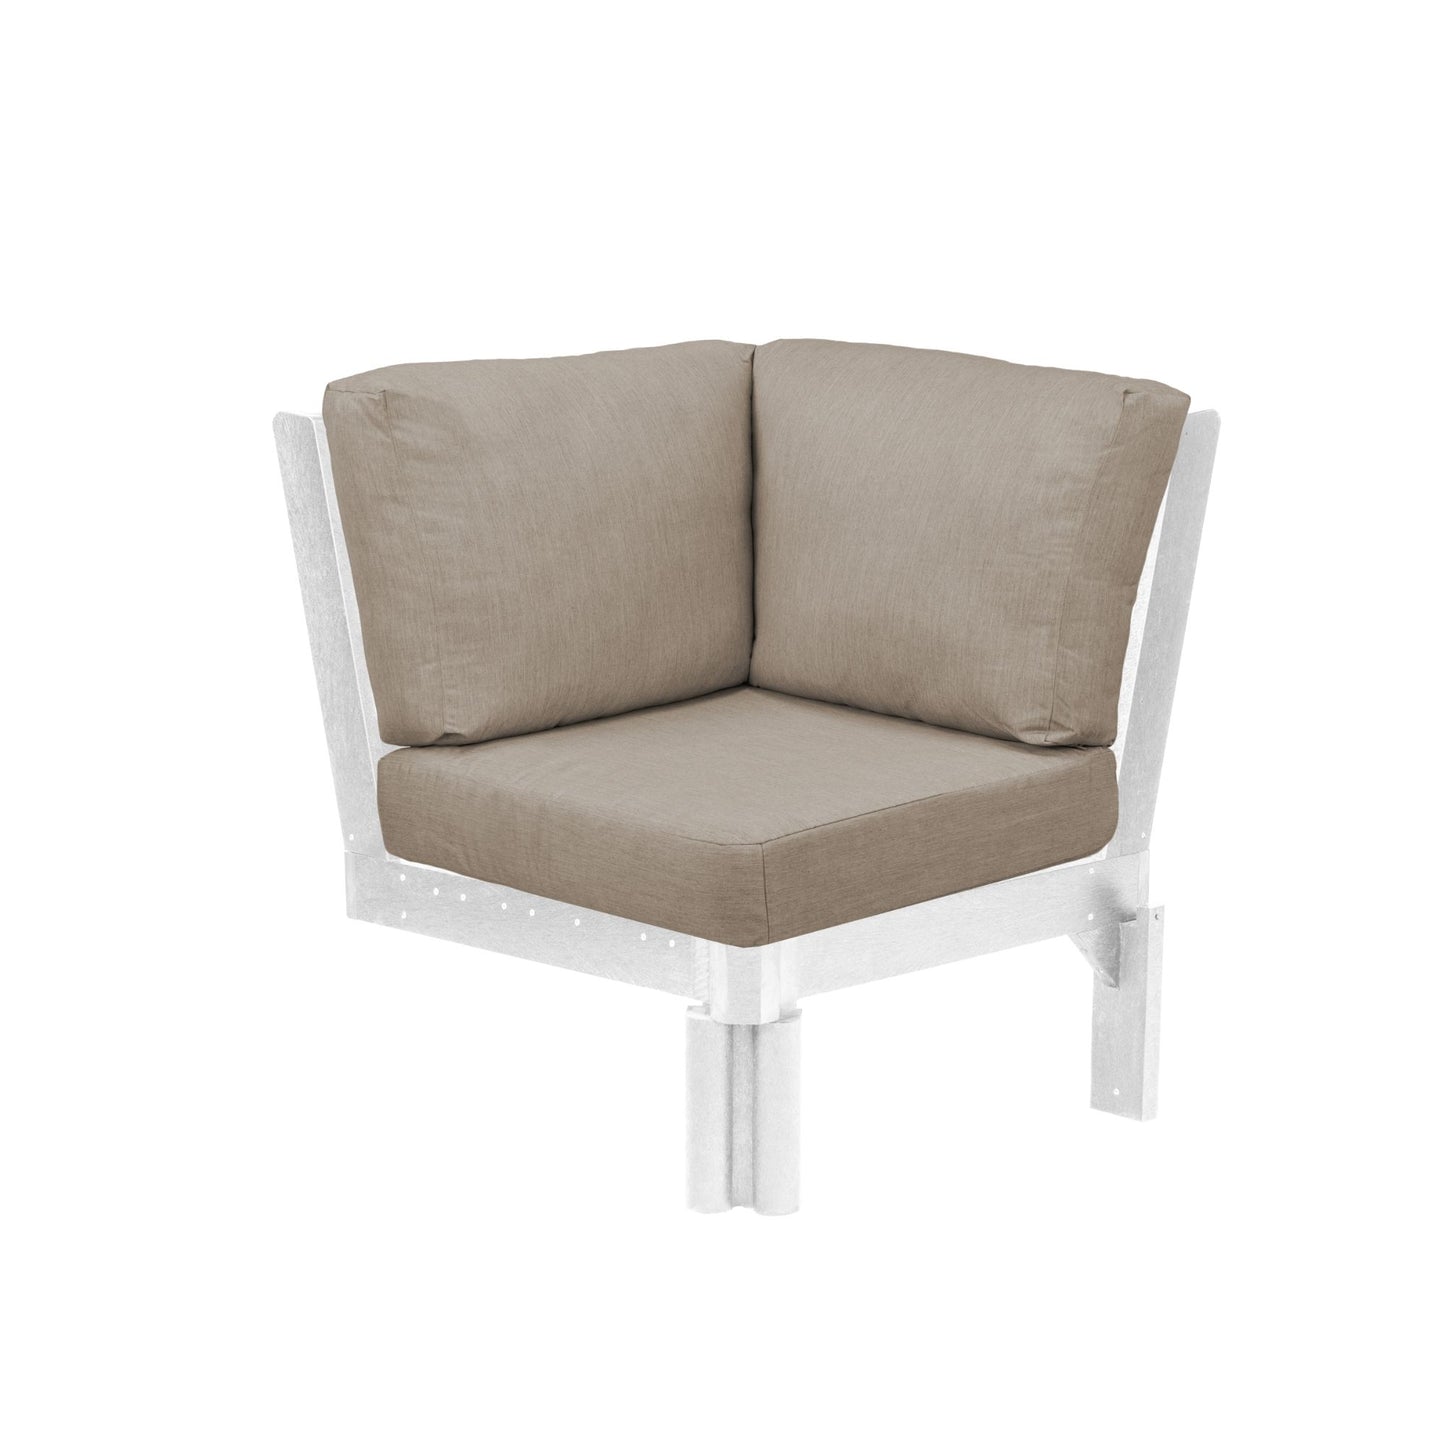 CR Plastics Tofino Sectional Corner with Cushions